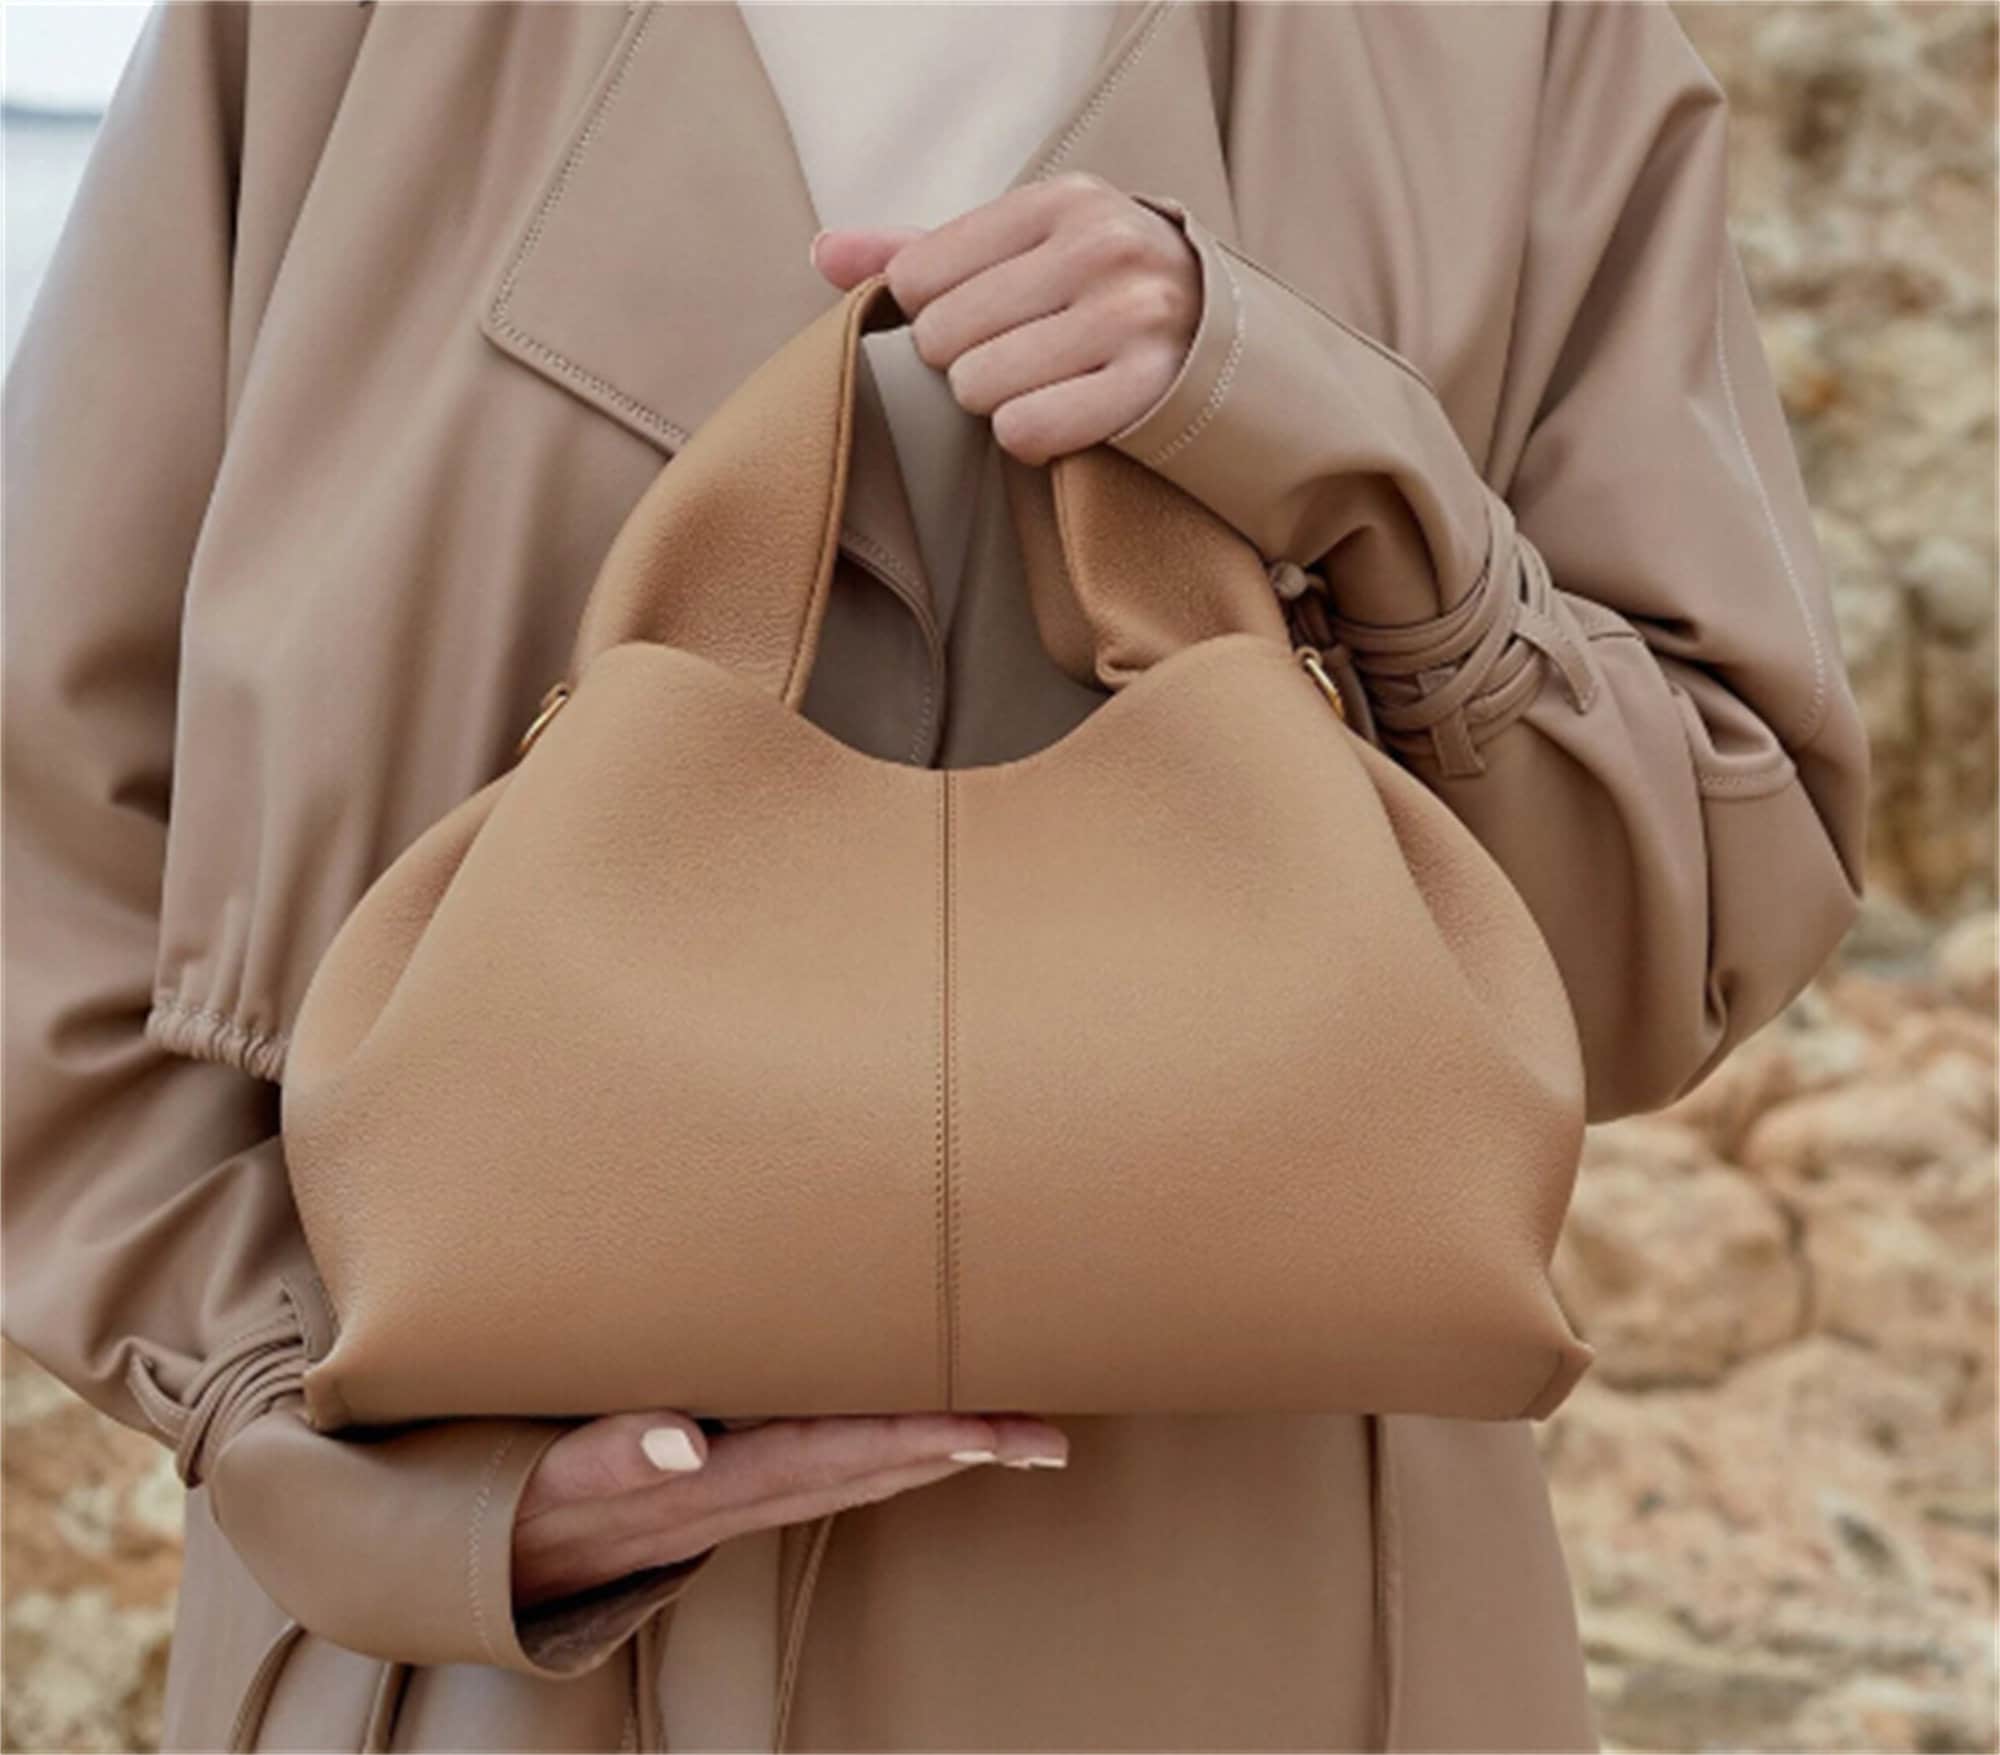 Polene micro bags, so cute. : r/handbags